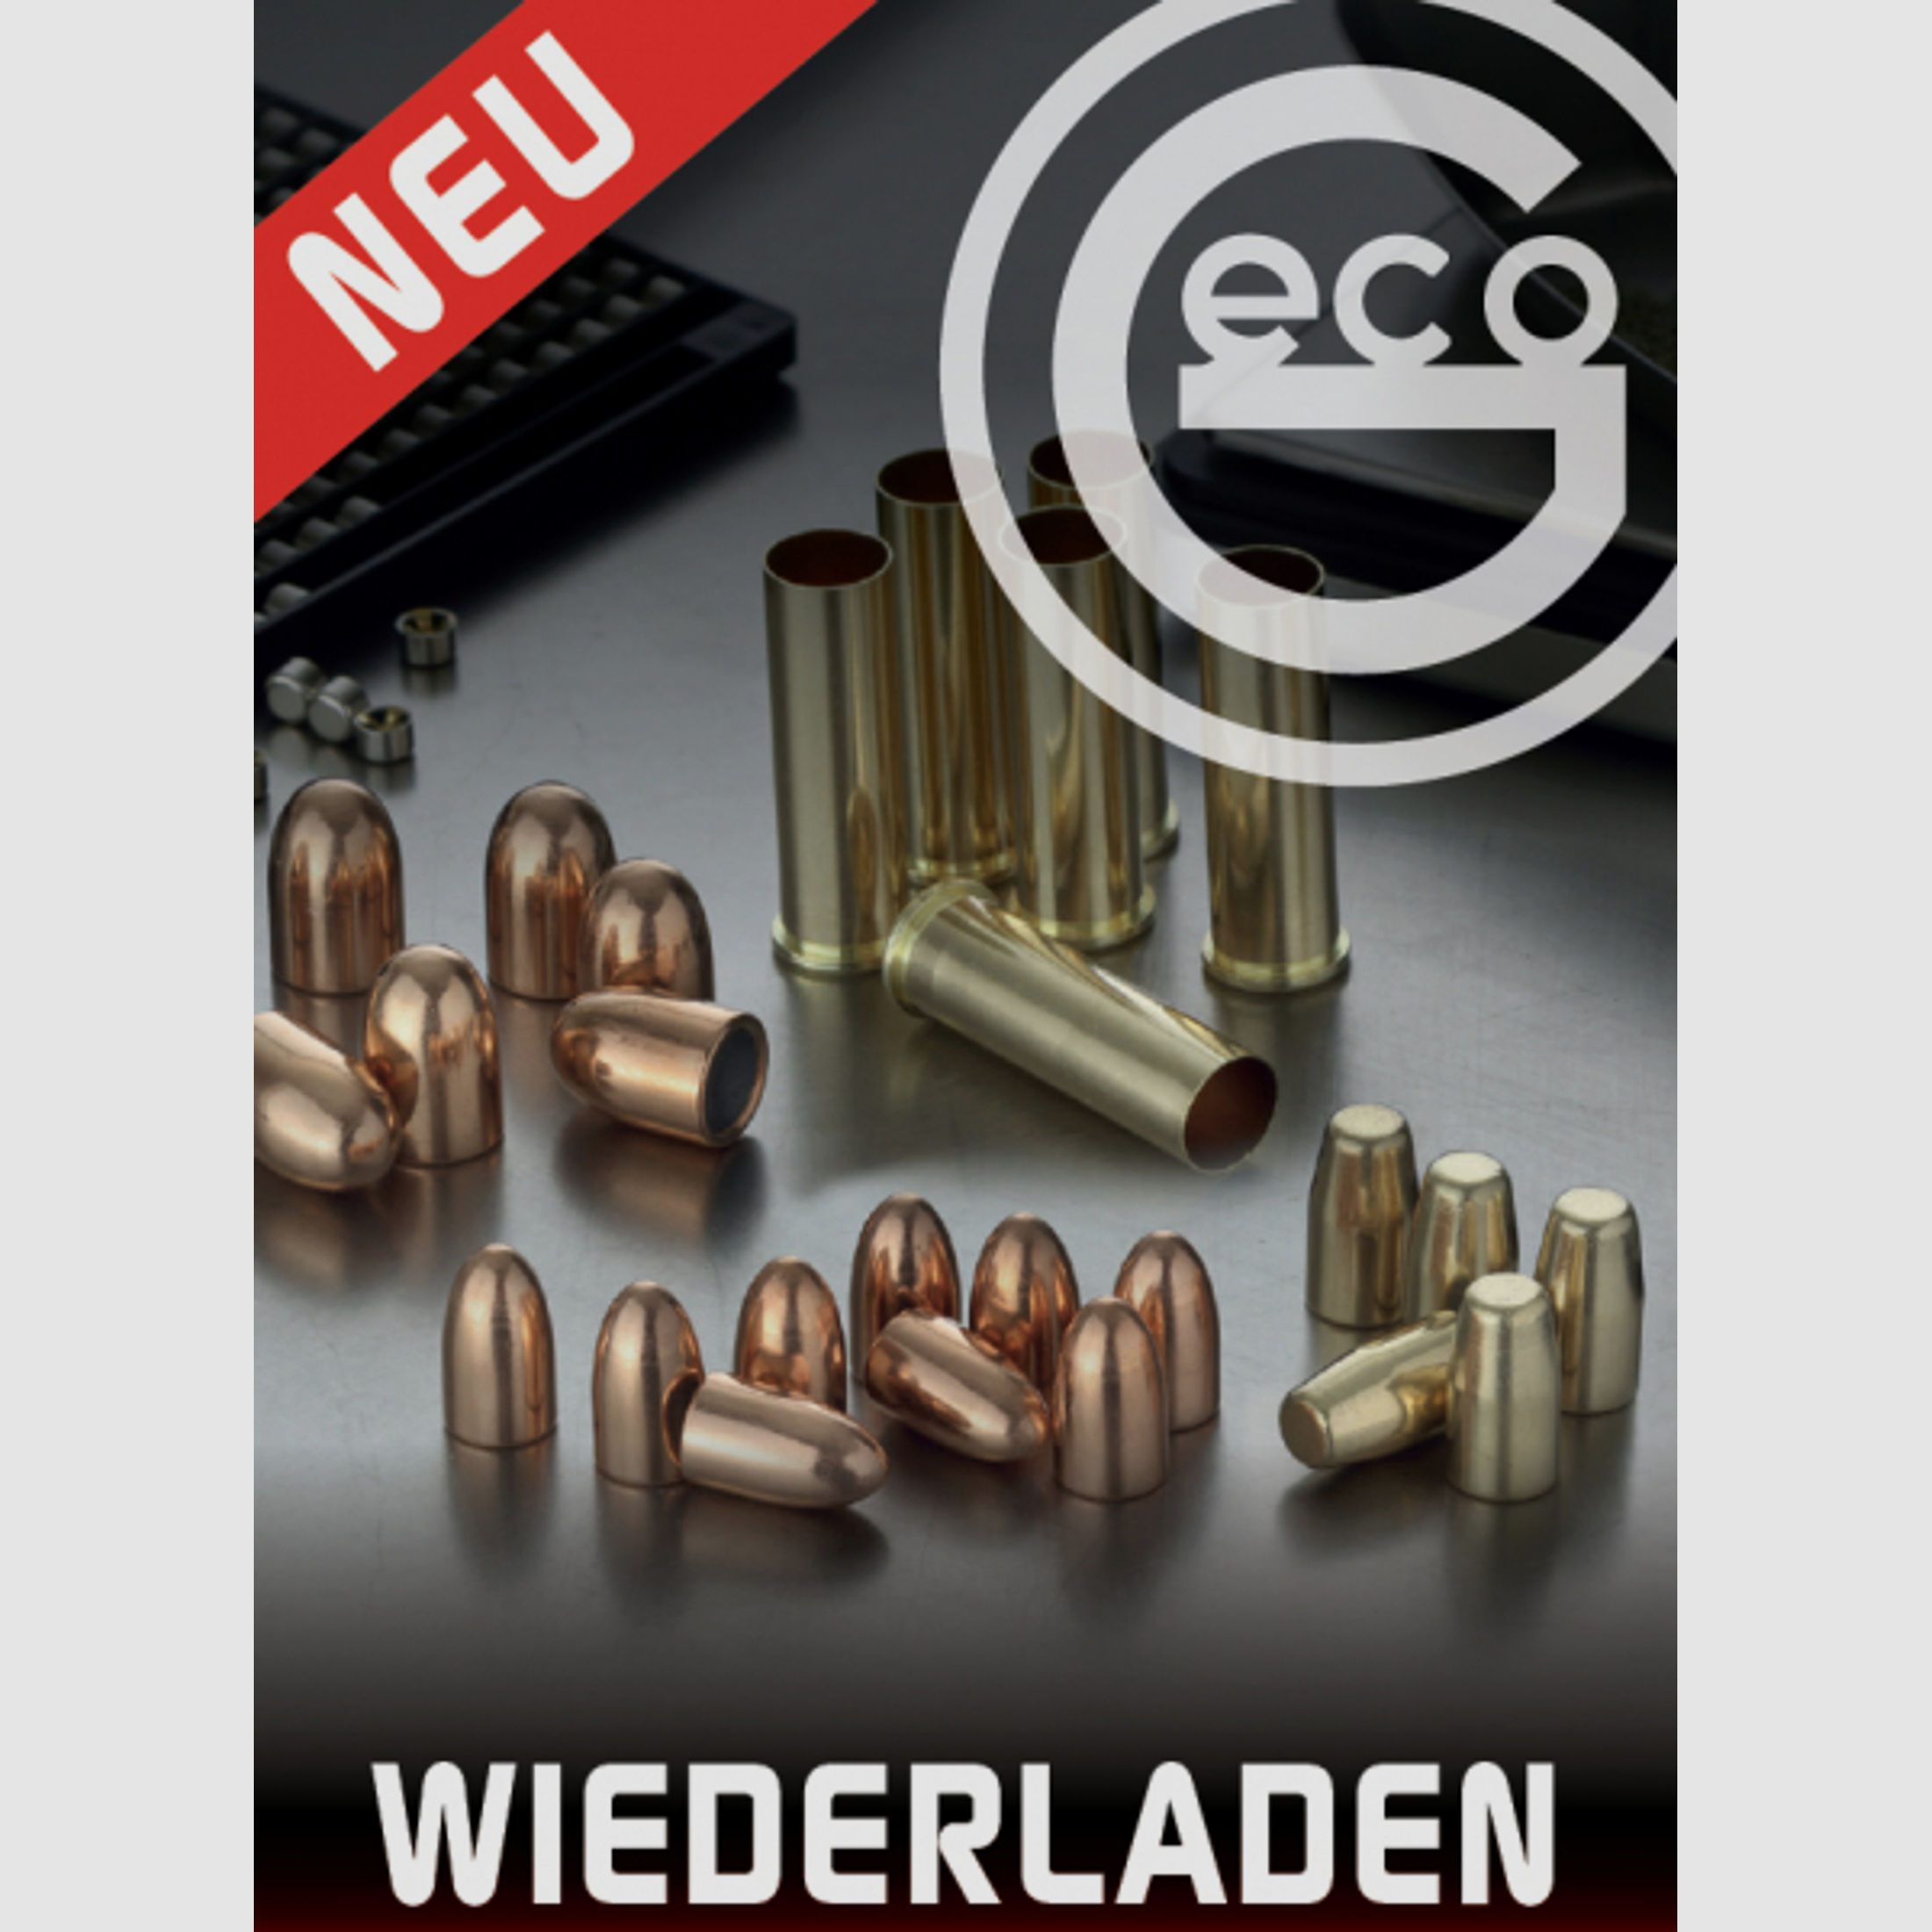 200 Stück NEUE GECO Geschosse 9mm/.355 124gr/8,0g FMJ-RN VM-RK VollmantelRundkopf Präzision #2400400